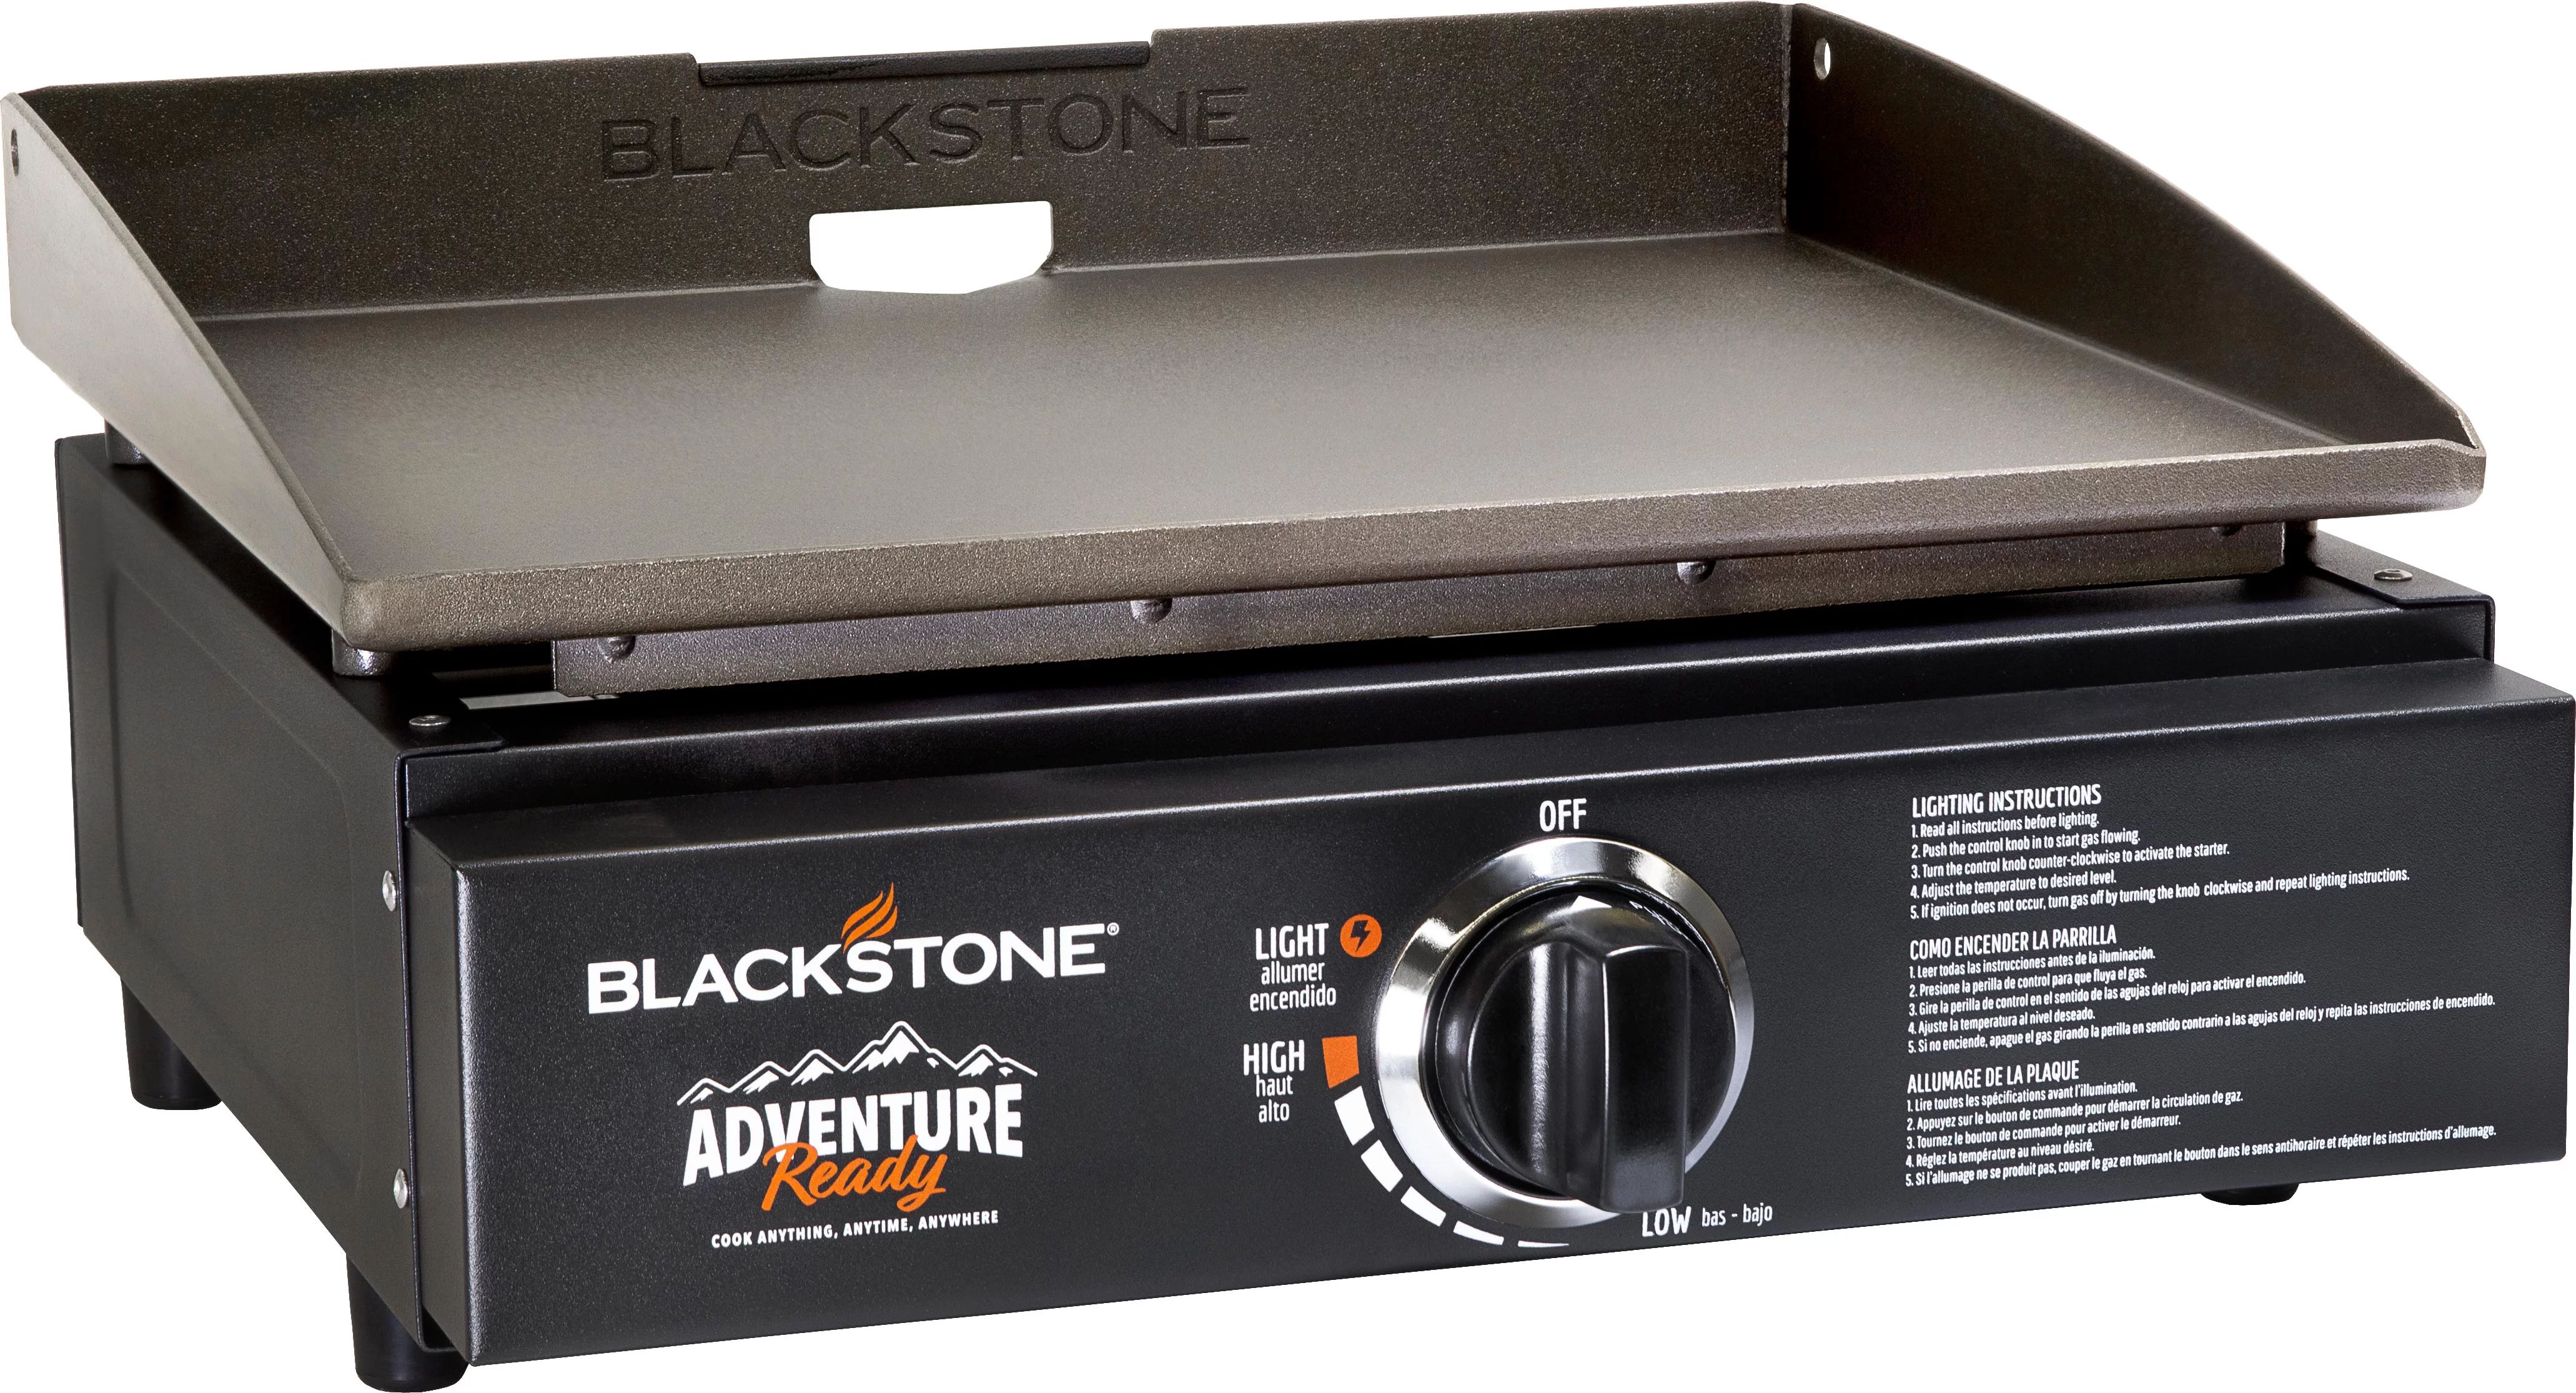 Blackstone Adventure Ready 17" Tabletop Outdoor Griddle | Walmart (US)